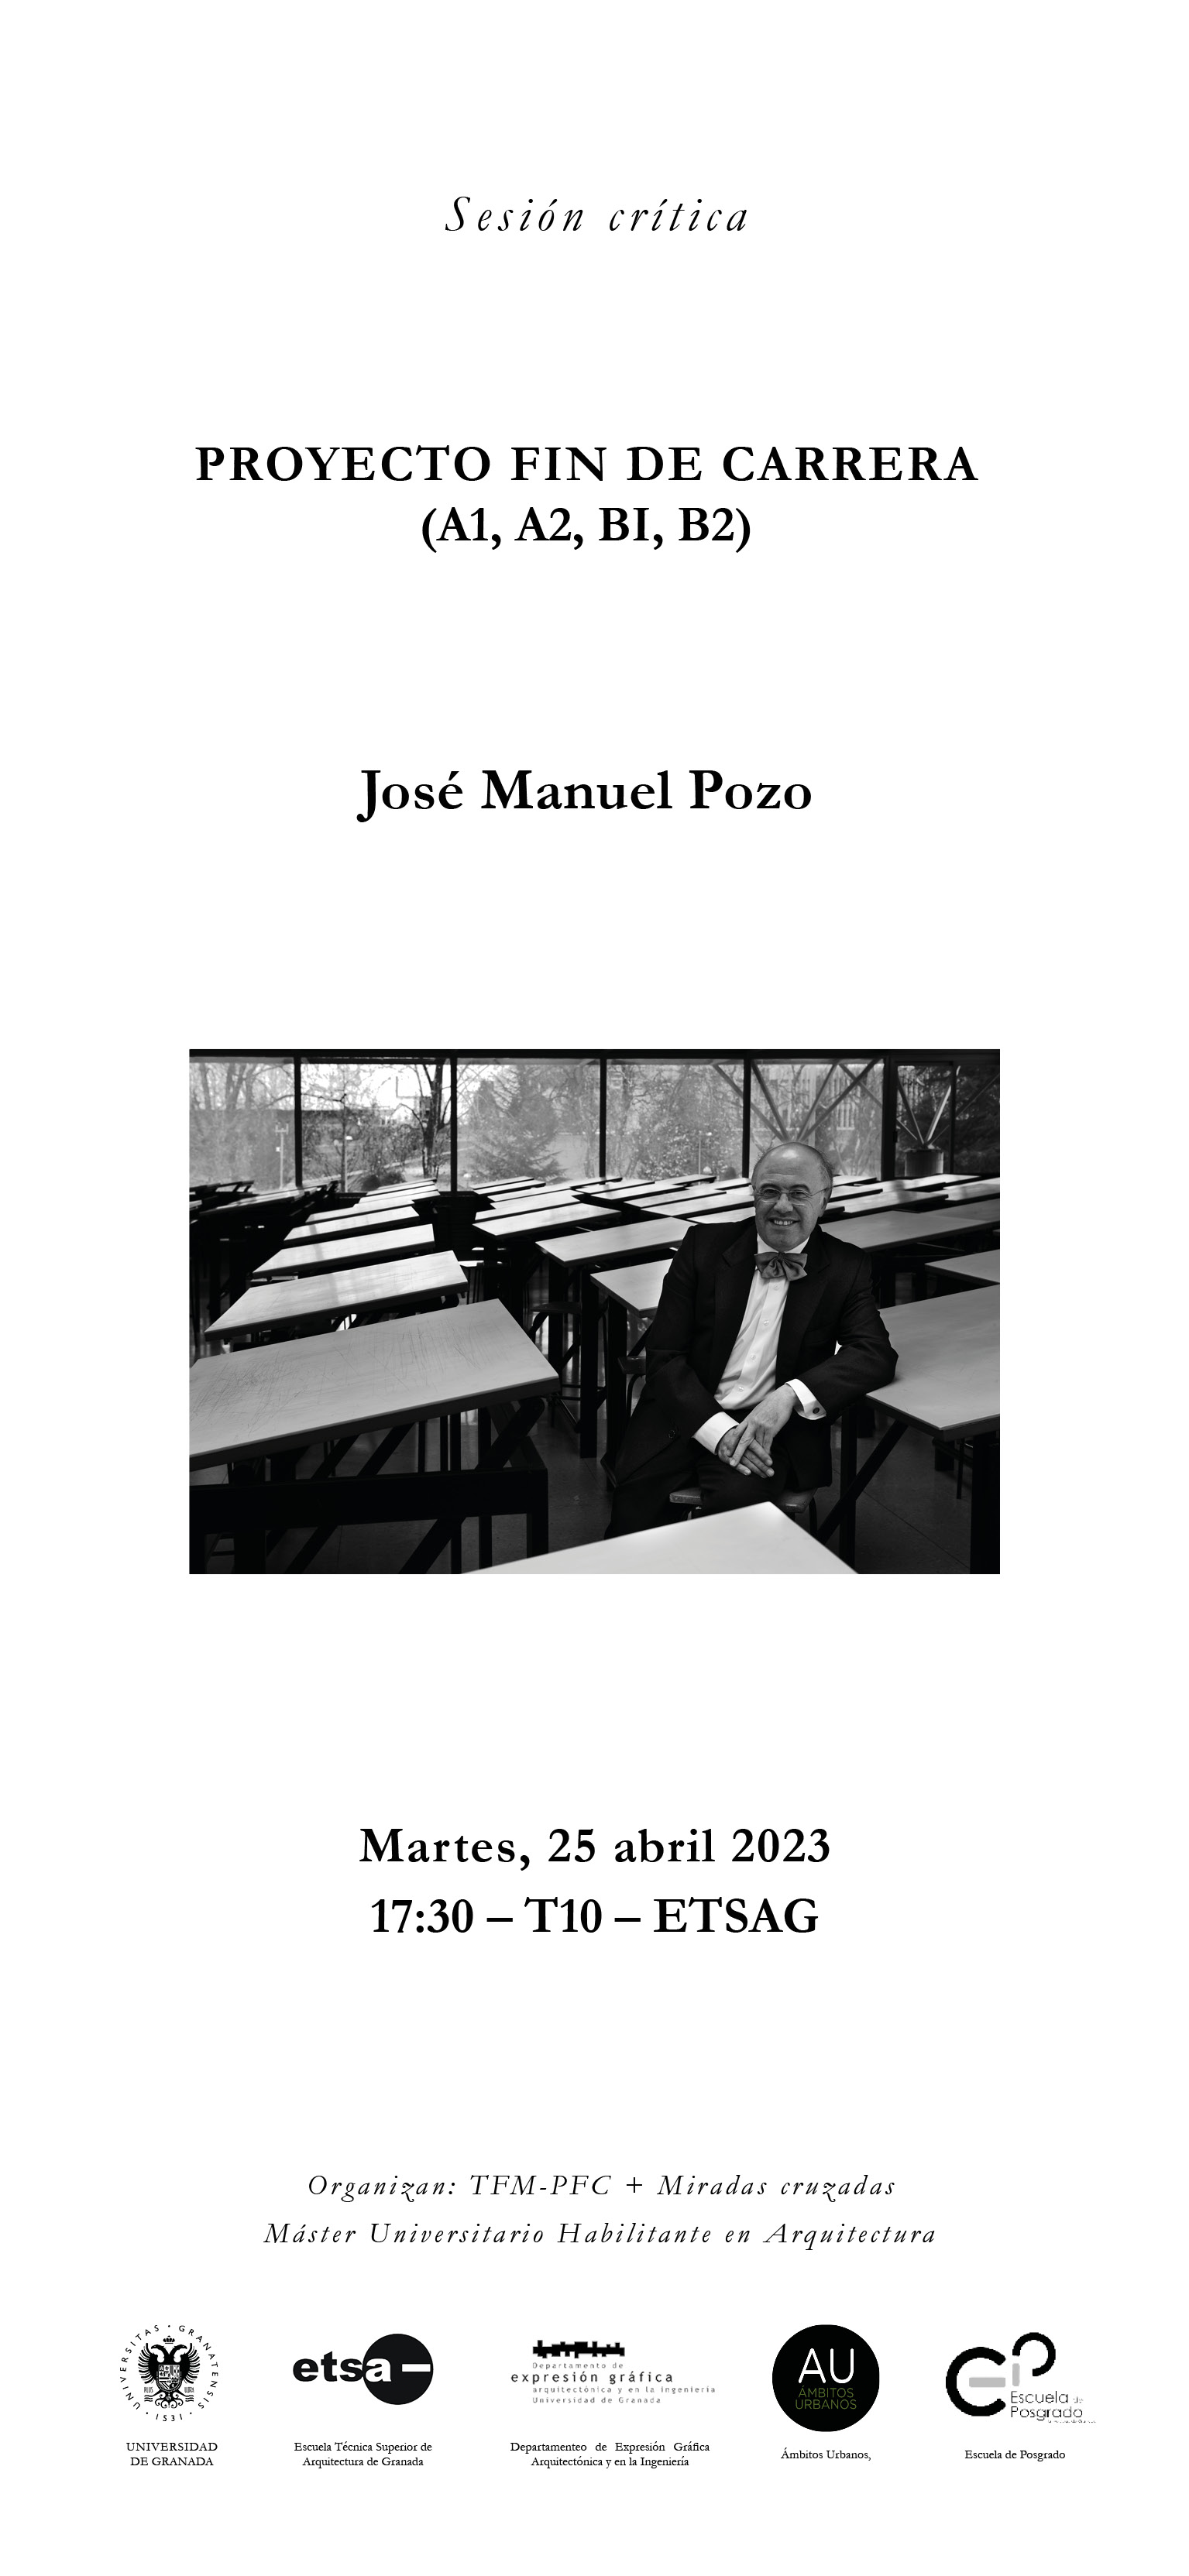 José Manuel Pozo